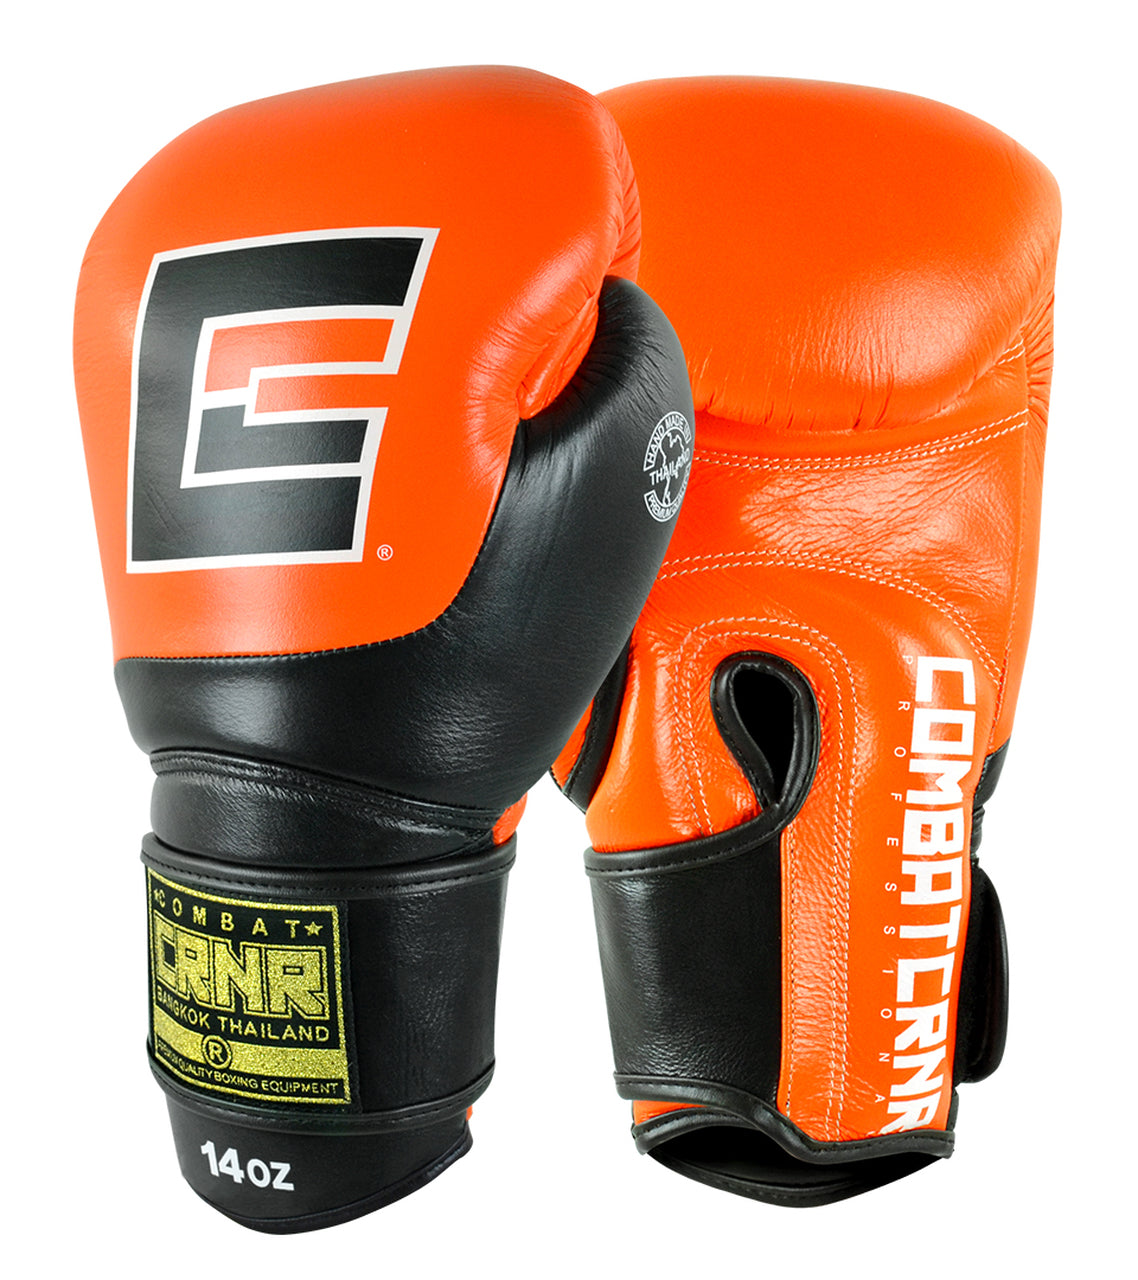 HMIT Champion Boxing Gloves